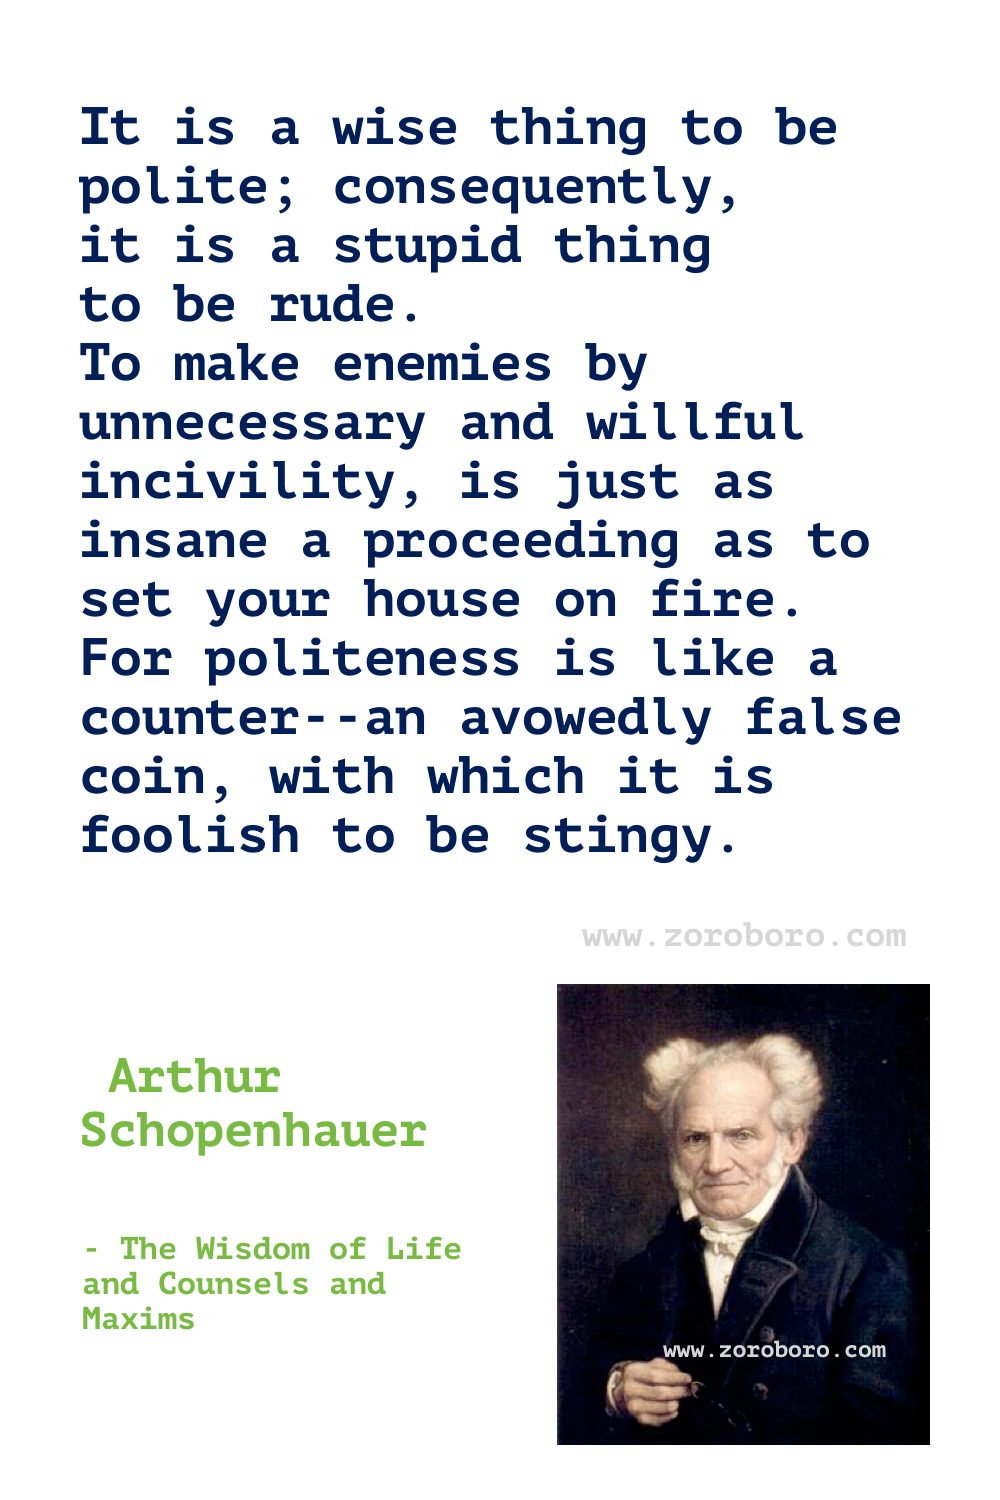 Arthur Schopenhauer Quotes, Arthur Schopenhauer Philosophy, Arthur Schopenhauer Essay & Books Quotes, Arthur Schopenhauer ON Intellectual, Mind, Loneliness, Love, Reading & Religion. Quotes By Schopenhauer (Part 1)